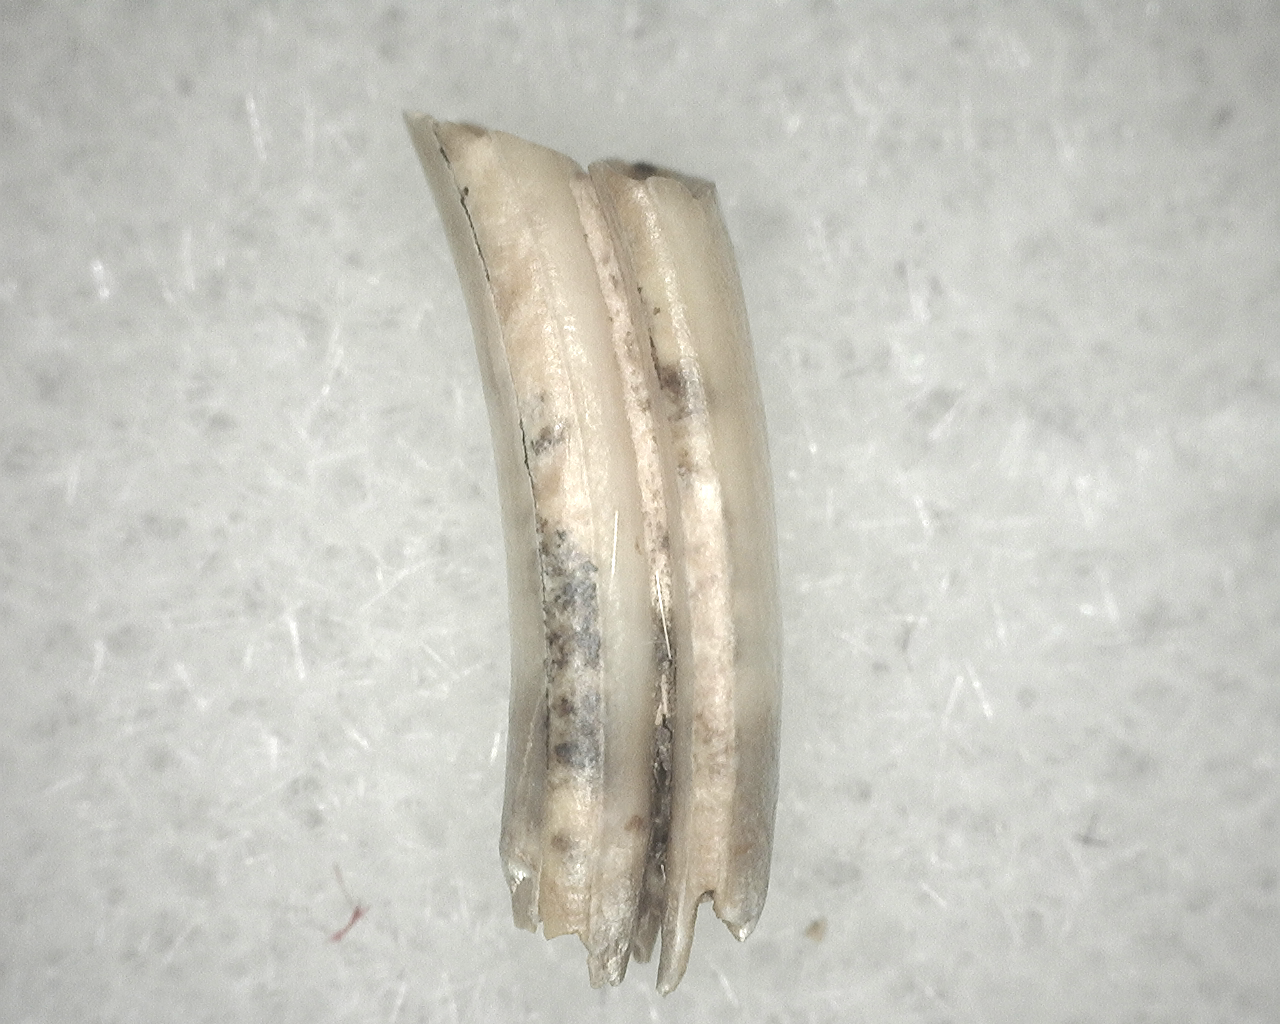 Genuine Fossil Pleistocene Neofiber Muskrat Tooth for Sale From Florida #14b